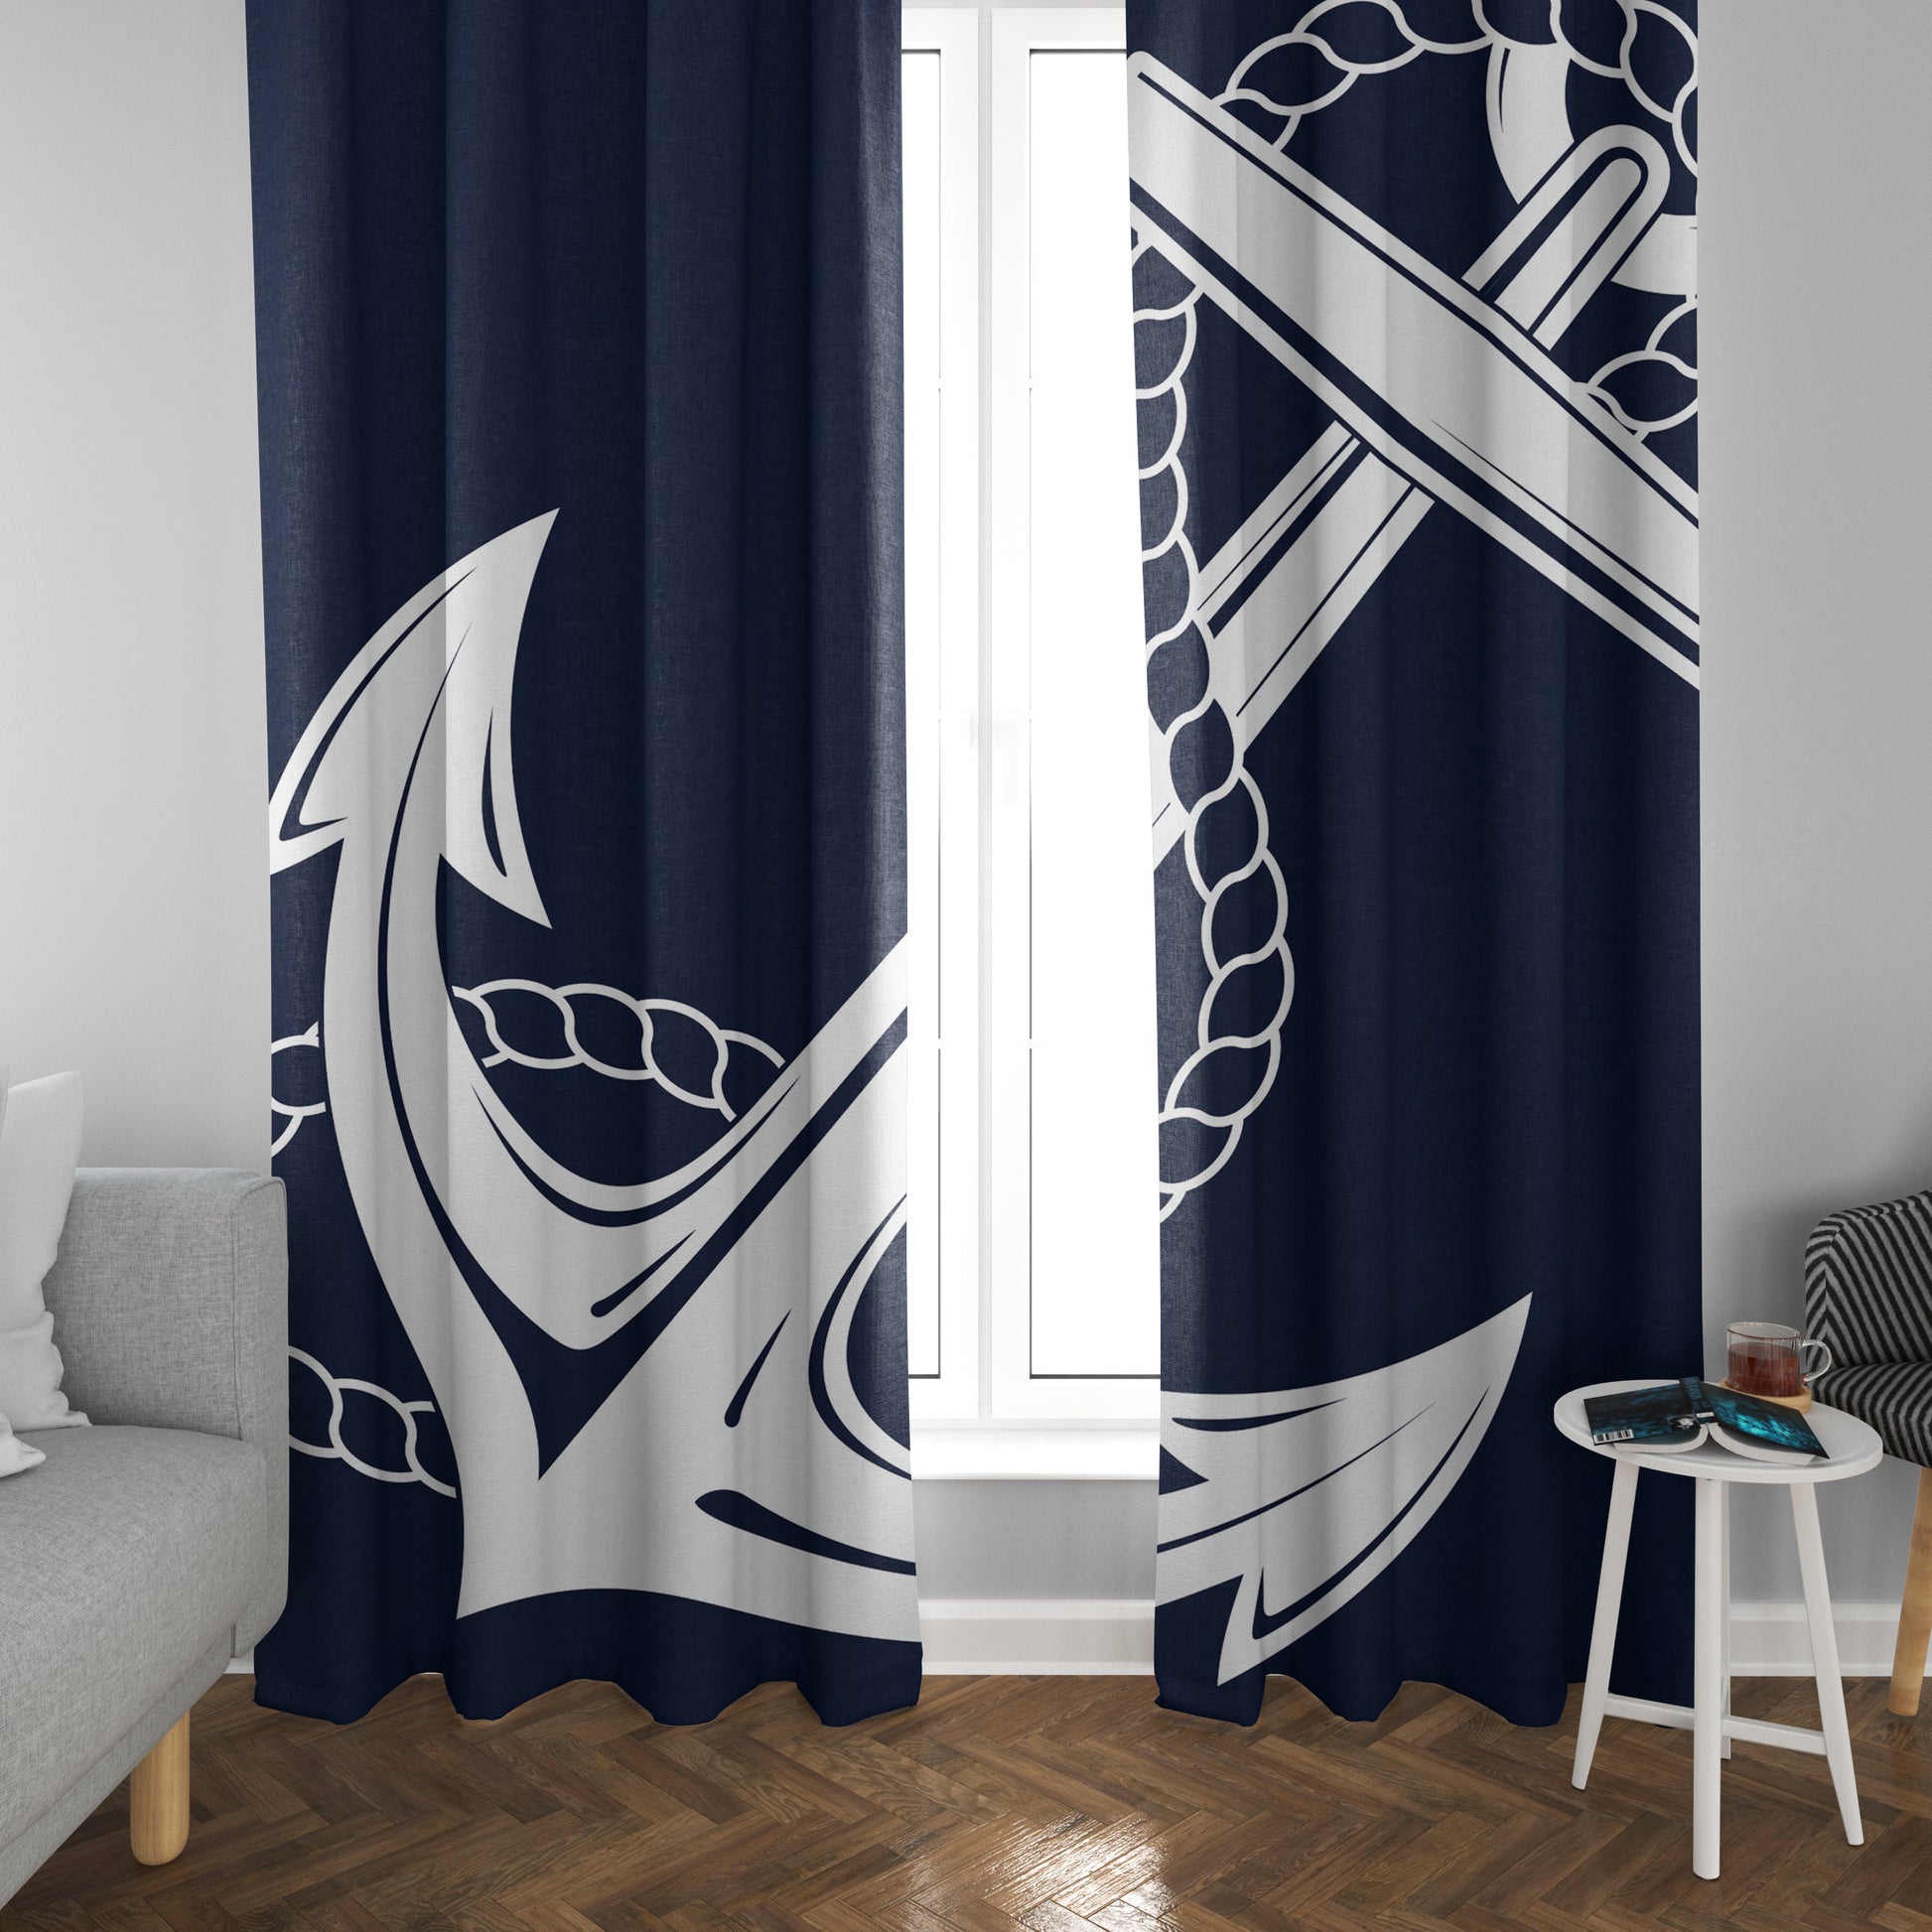 Anchor Window Curtains navy white nautical Drapery Curtain Panels anchors window treatment beach tropical decor